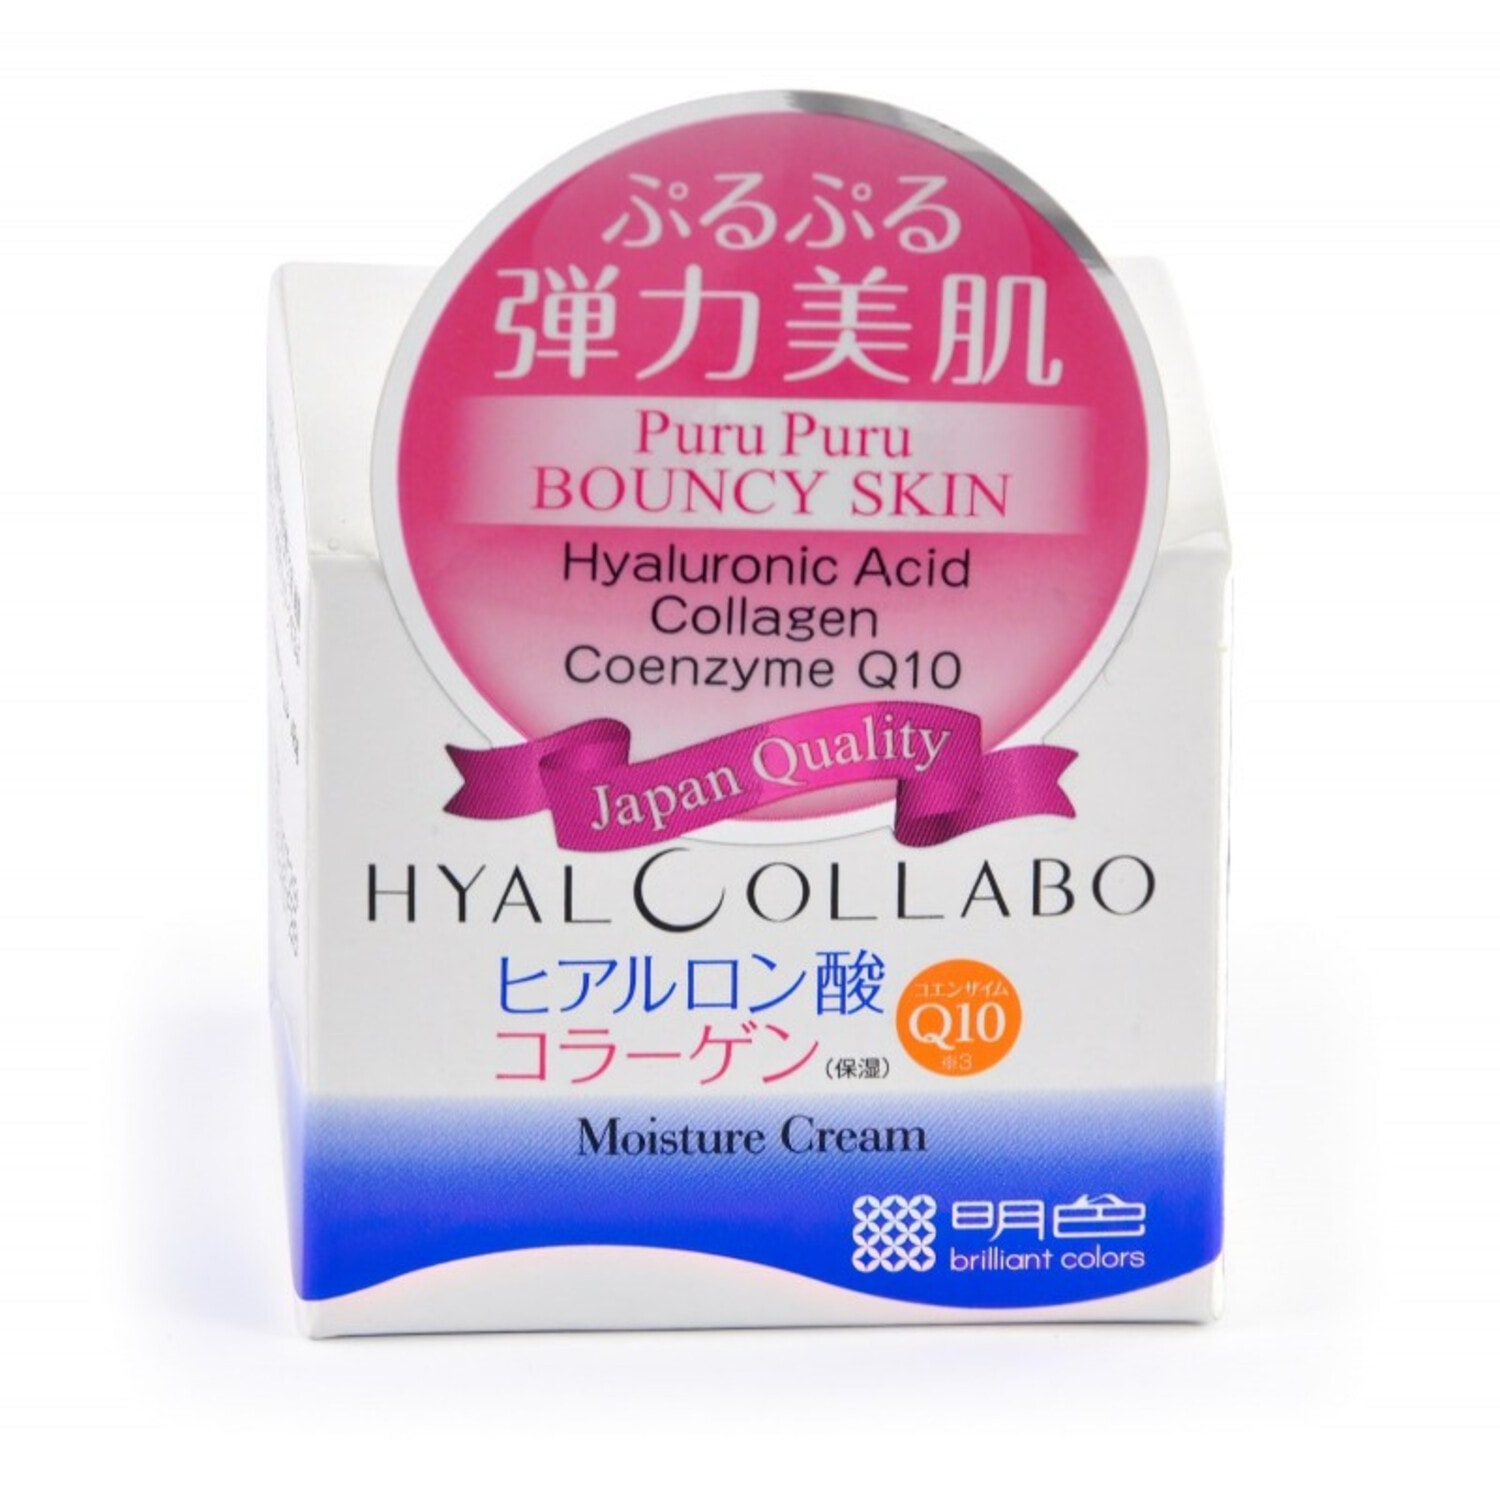 Meishoku "Hyalcollabo" Глубокоувлажняющий крем для лица с гиалуроновой кислотой 48 г. / 227080 (3Т)